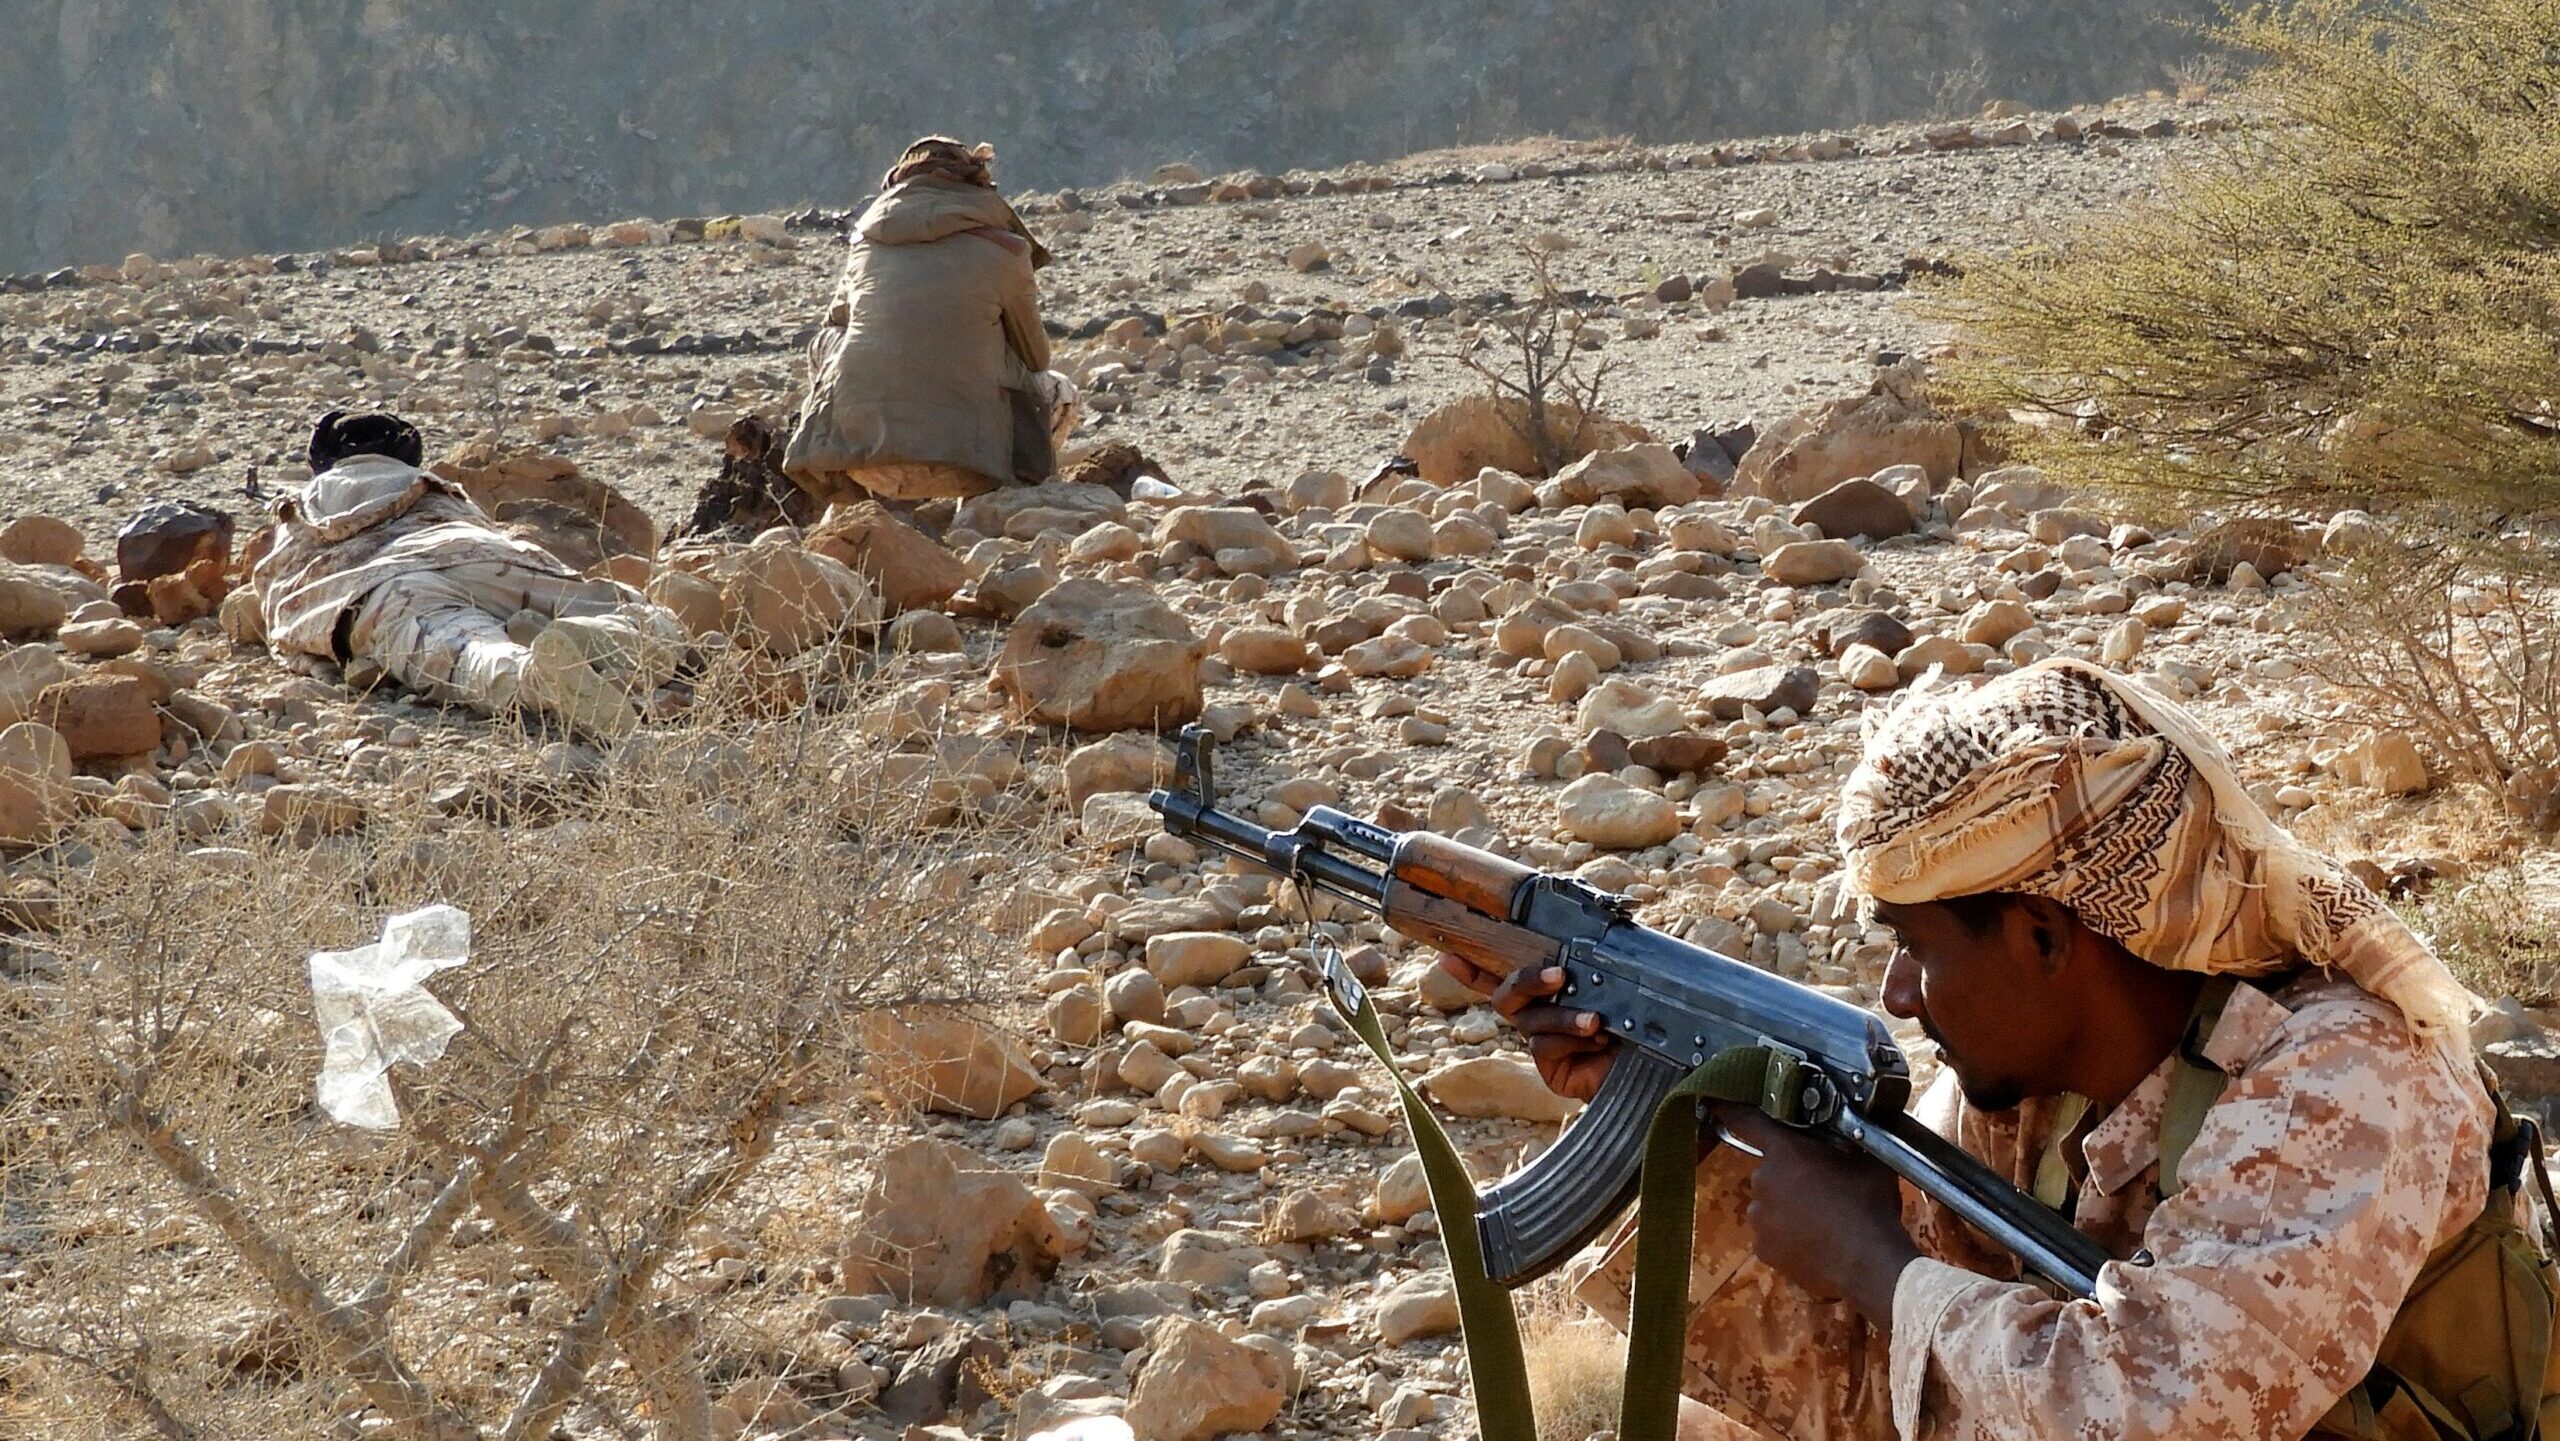 Explosion Kills 6 South Yemen Rebel Troops in Suspected al-Qaida Attack